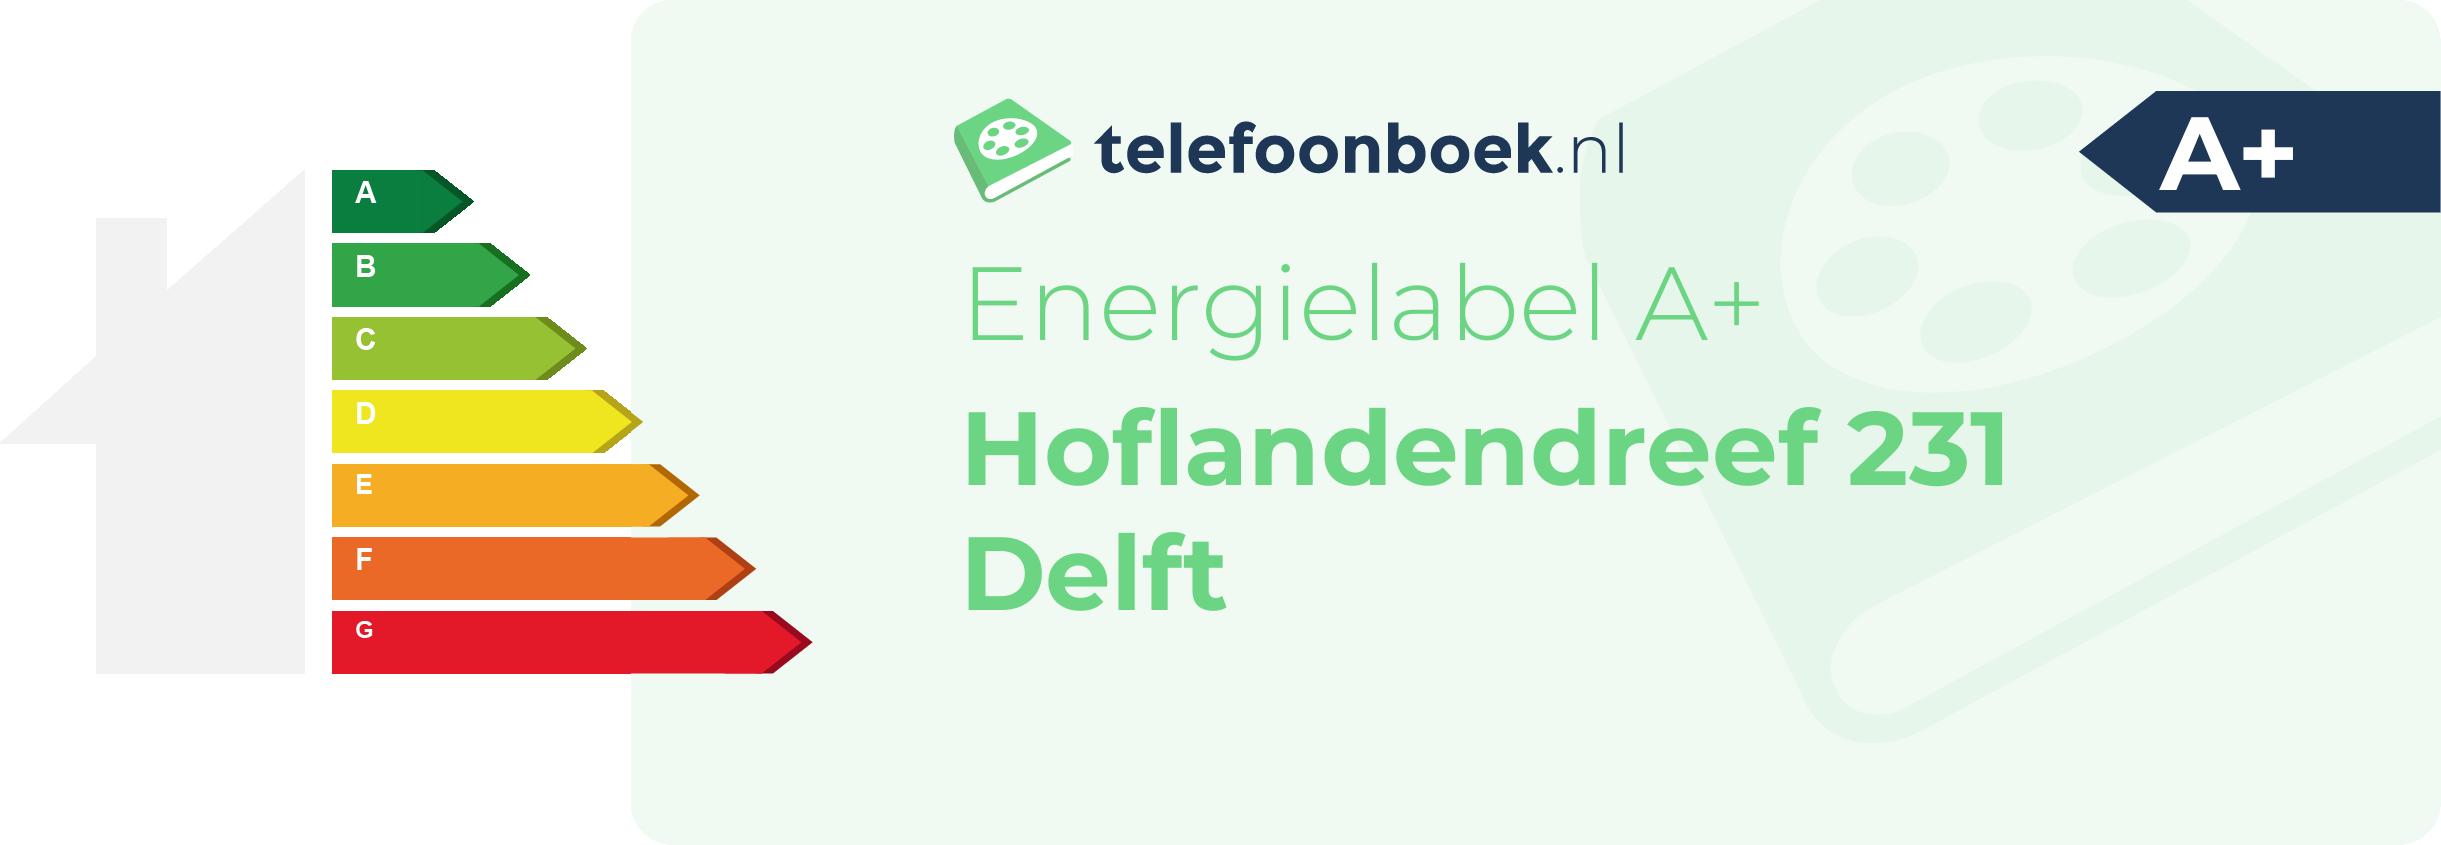 Energielabel Hoflandendreef 231 Delft